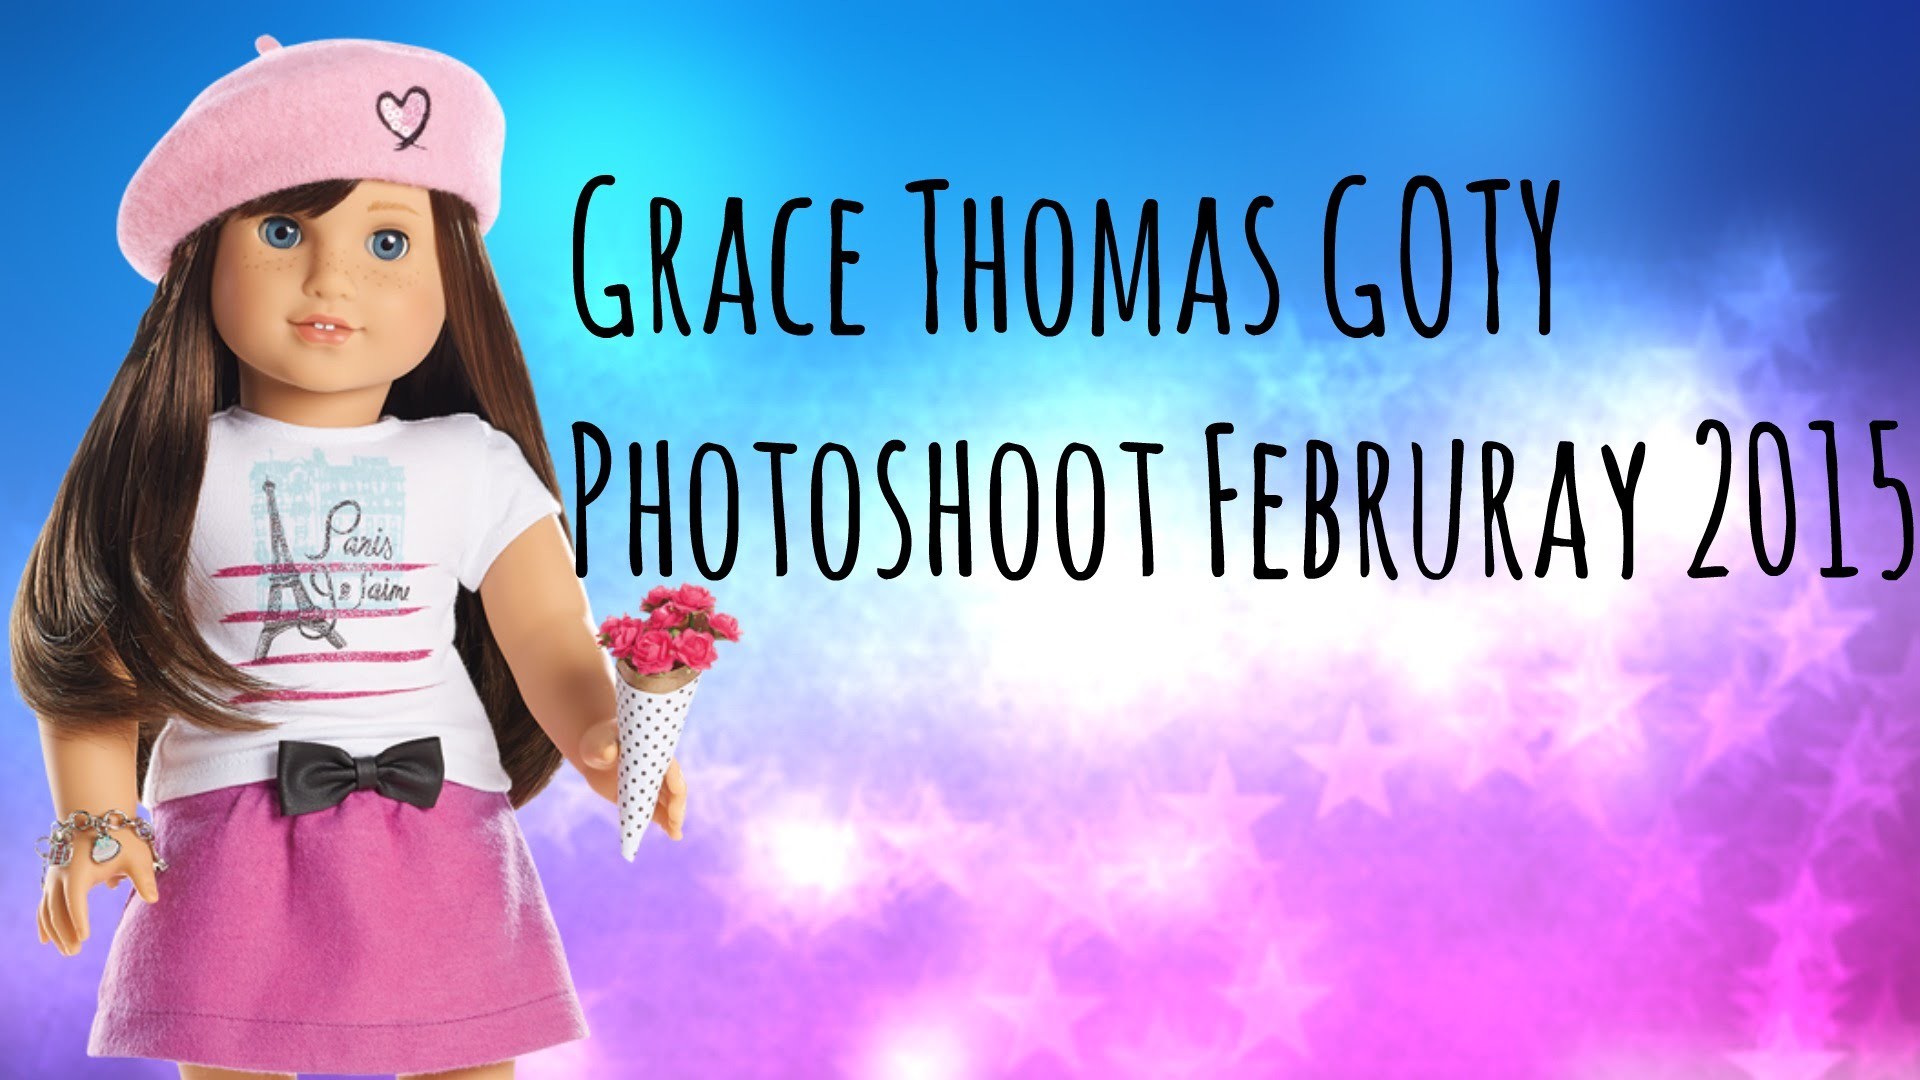 1920x1080 American Girl Grace Thomas GOTY Photoshoot & Slideshow!